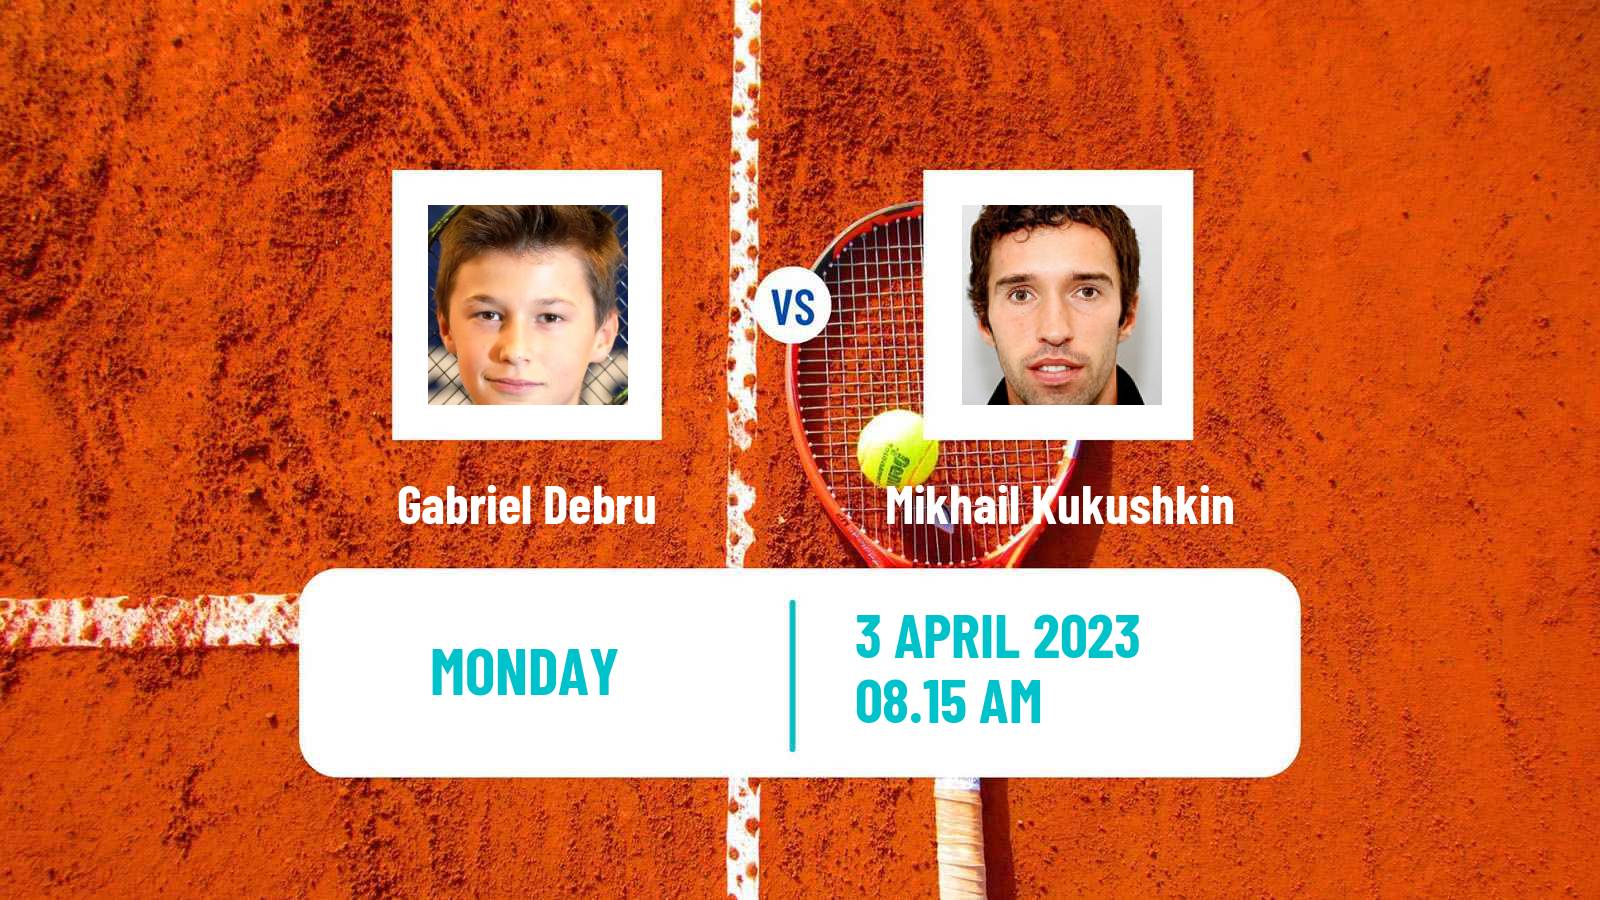 Tennis ATP Challenger Gabriel Debru - Mikhail Kukushkin